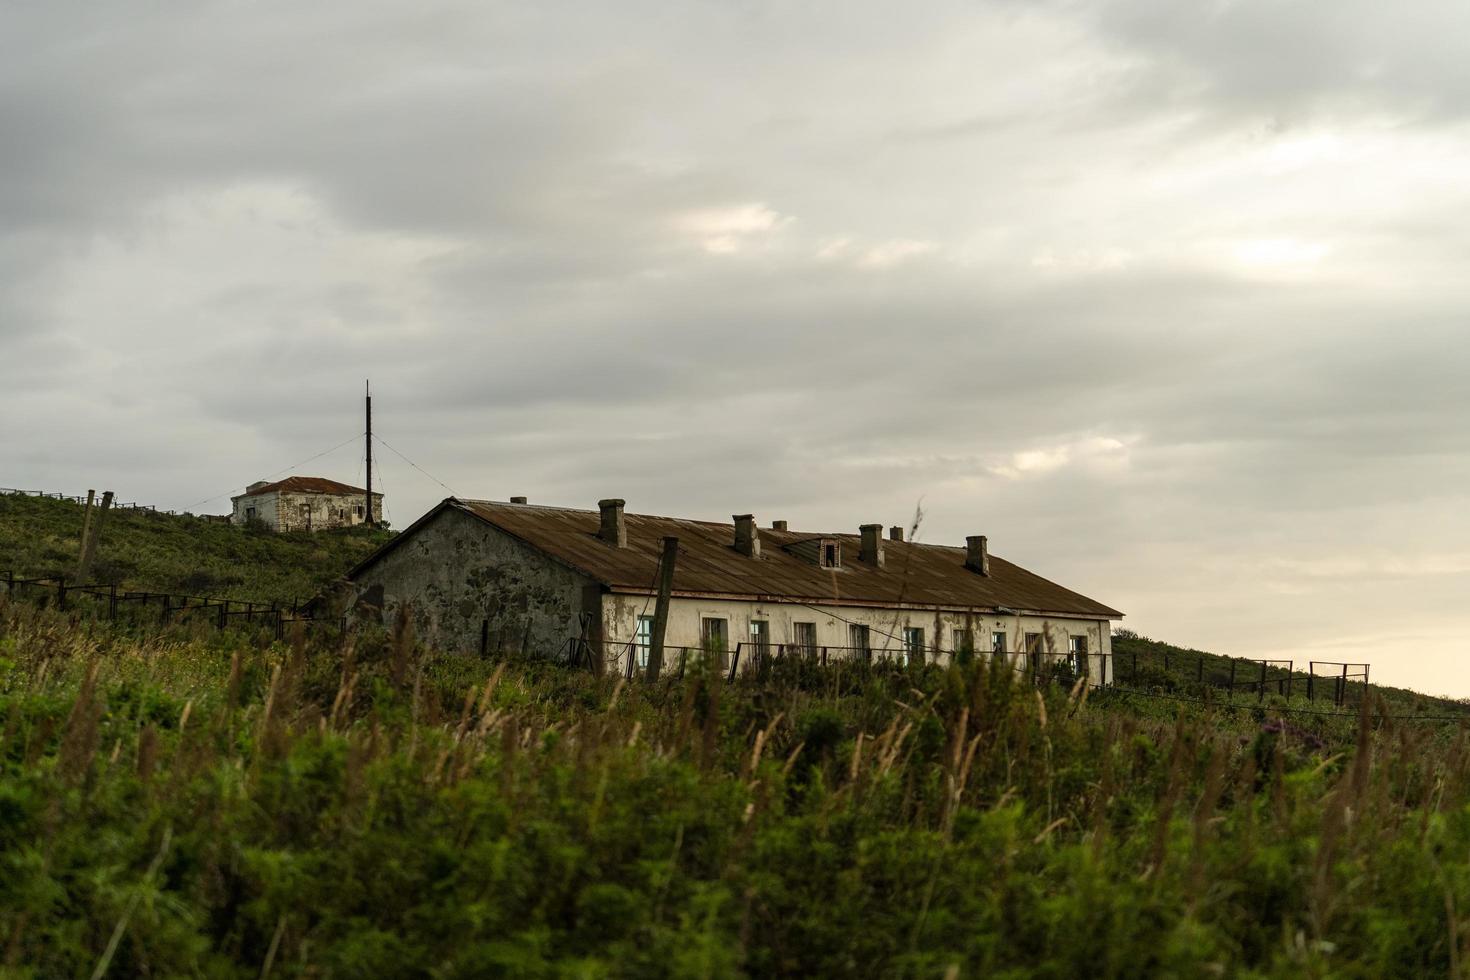 paisaje con viejas casas abandonadas. foto